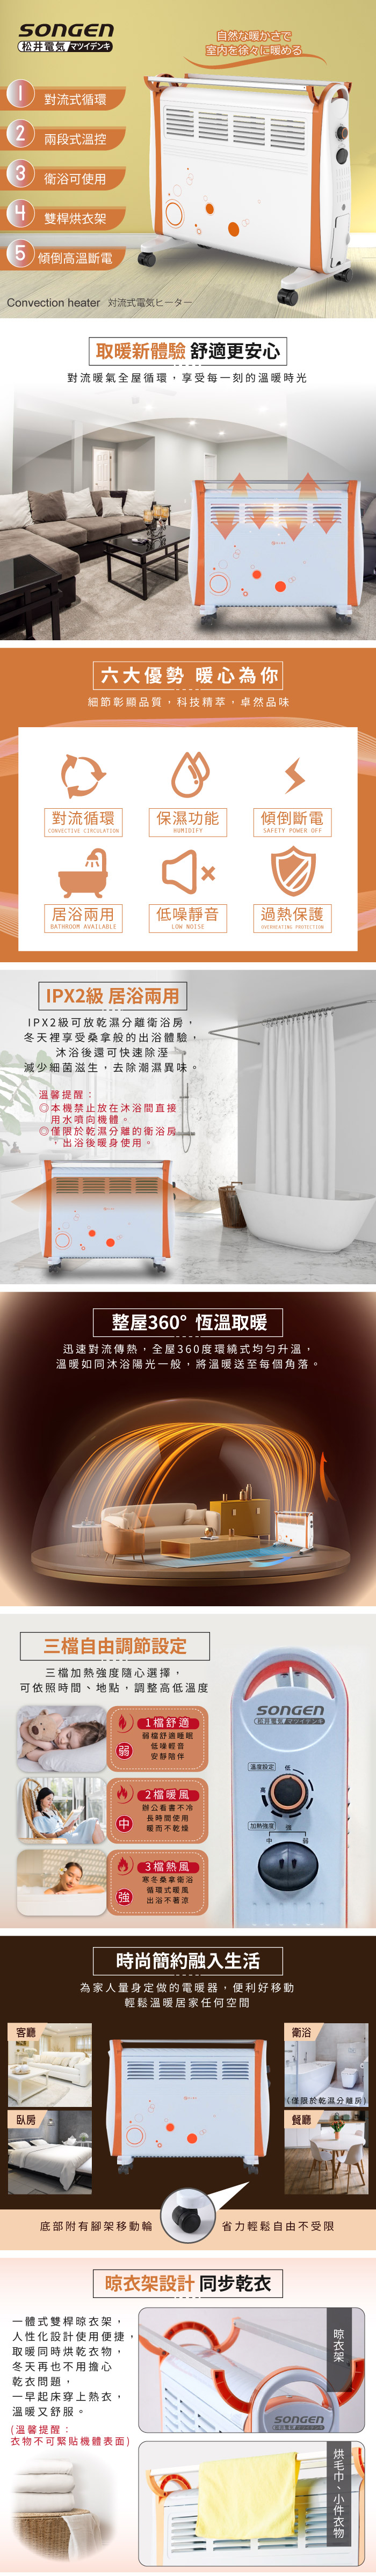 【SONGEN松井】居浴兩用對流式電暖器 /暖氣機(SG-710RCT)